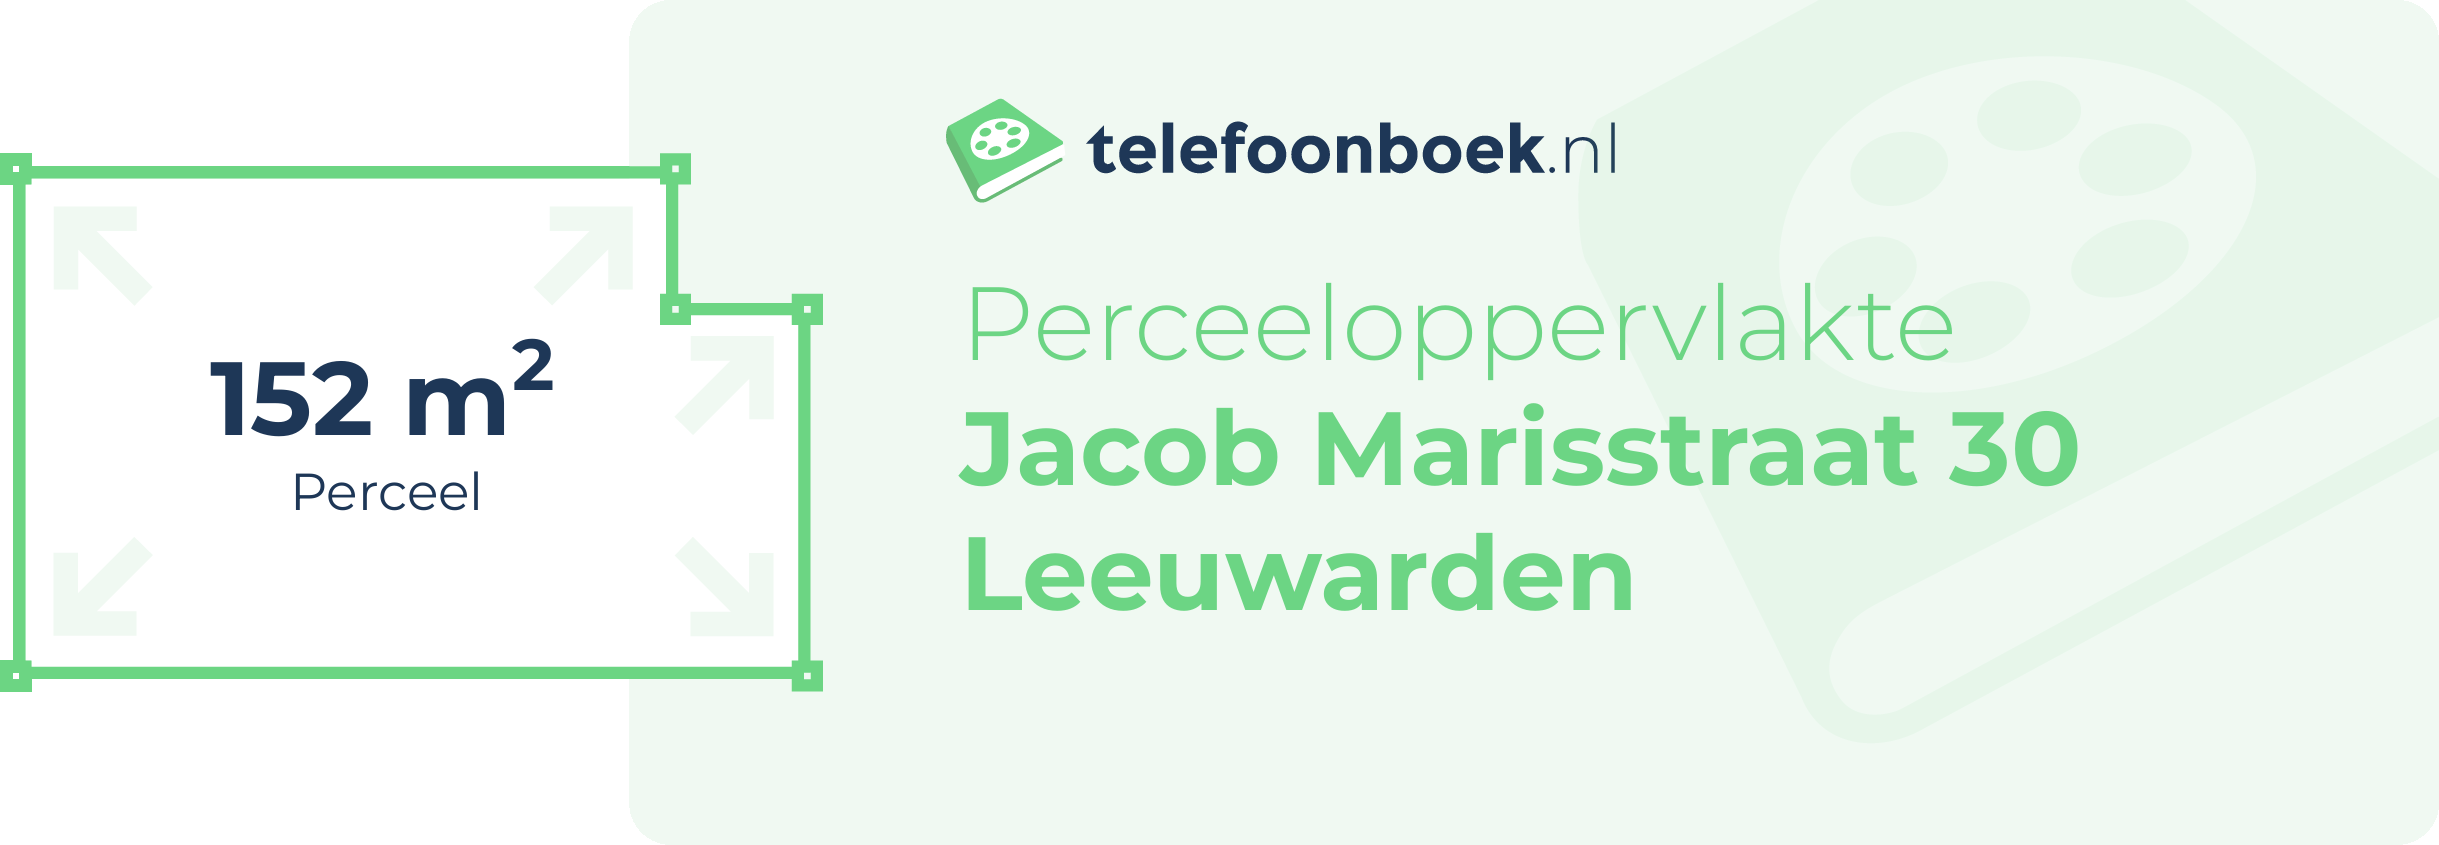 Perceeloppervlakte Jacob Marisstraat 30 Leeuwarden